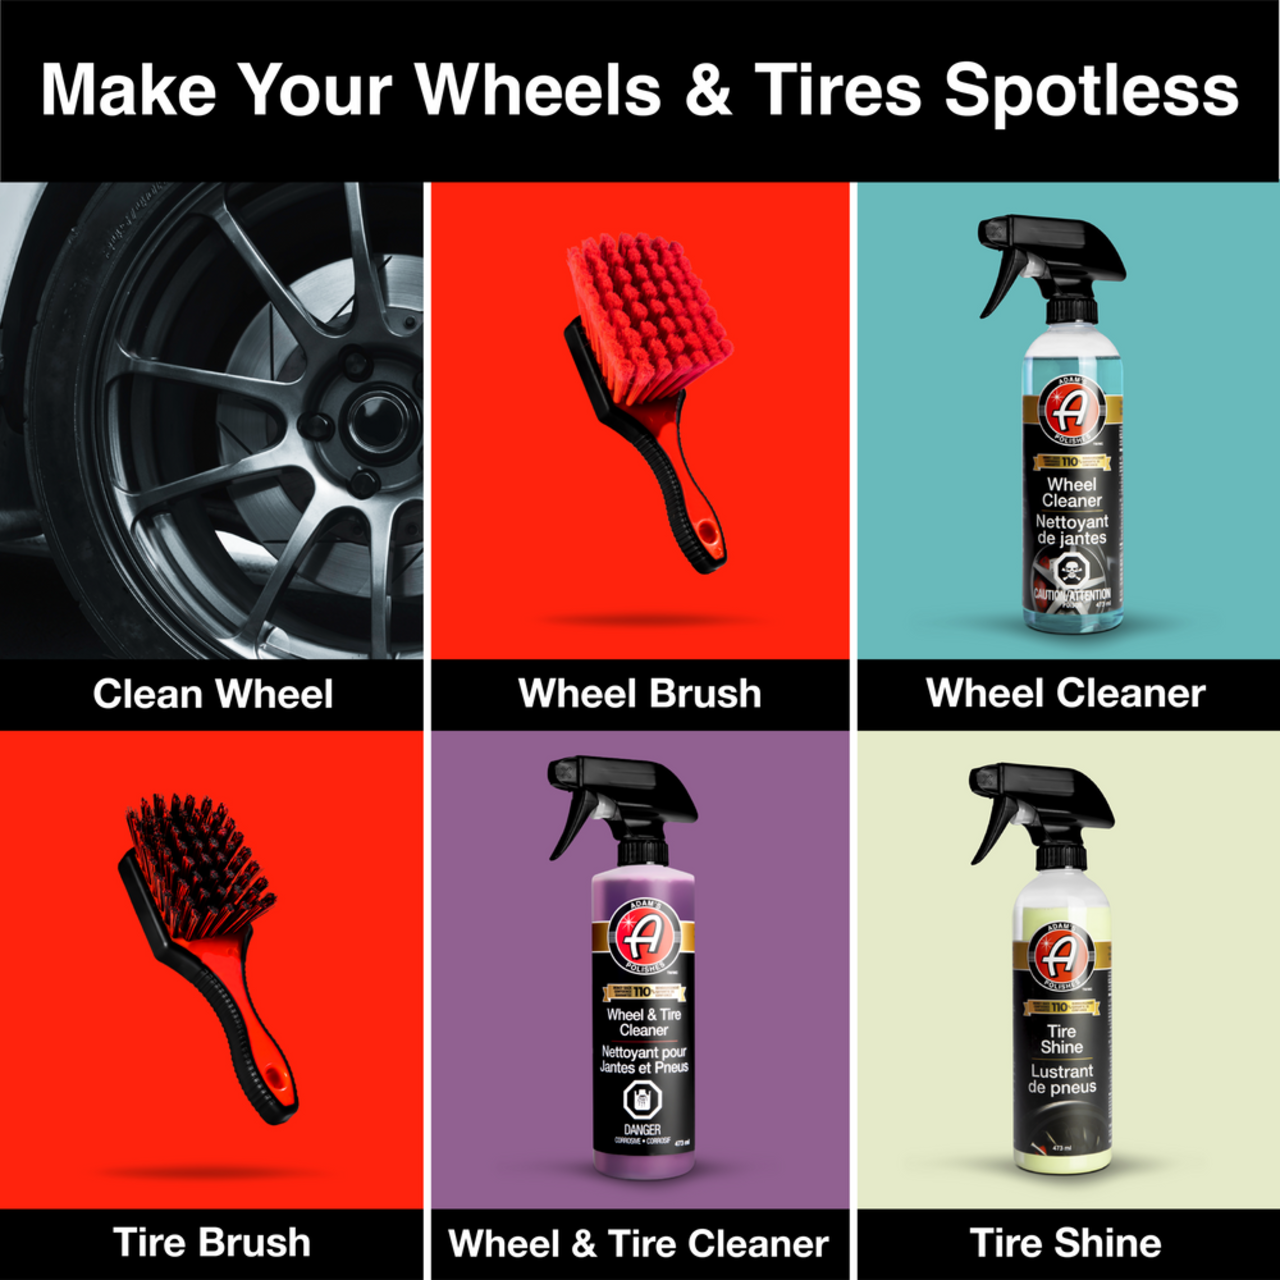 Adam's Wheel & Tire Cleaner